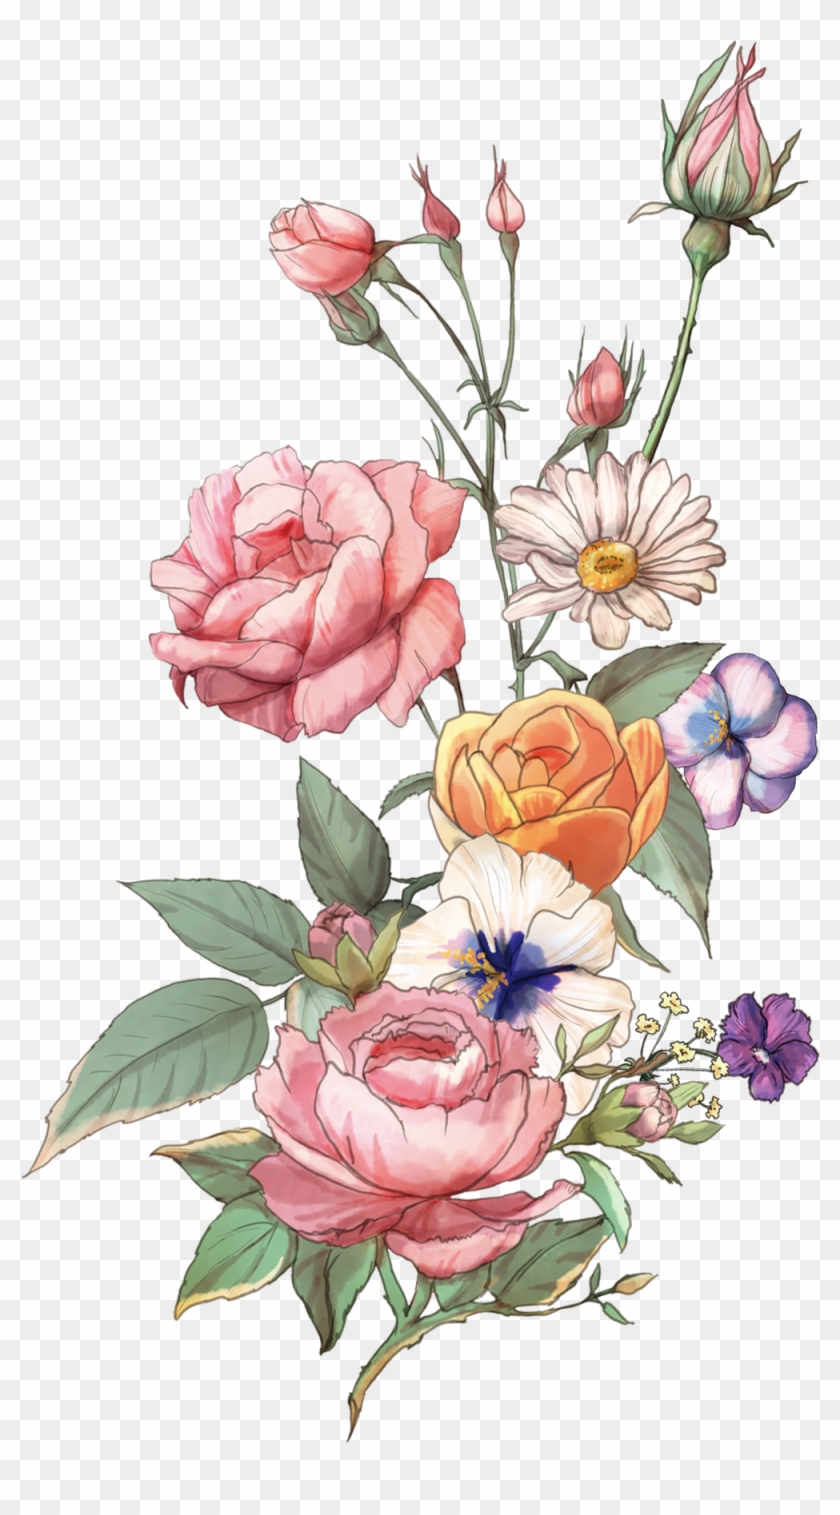 Flower Tattoos Transparent - Tattoos Gallery